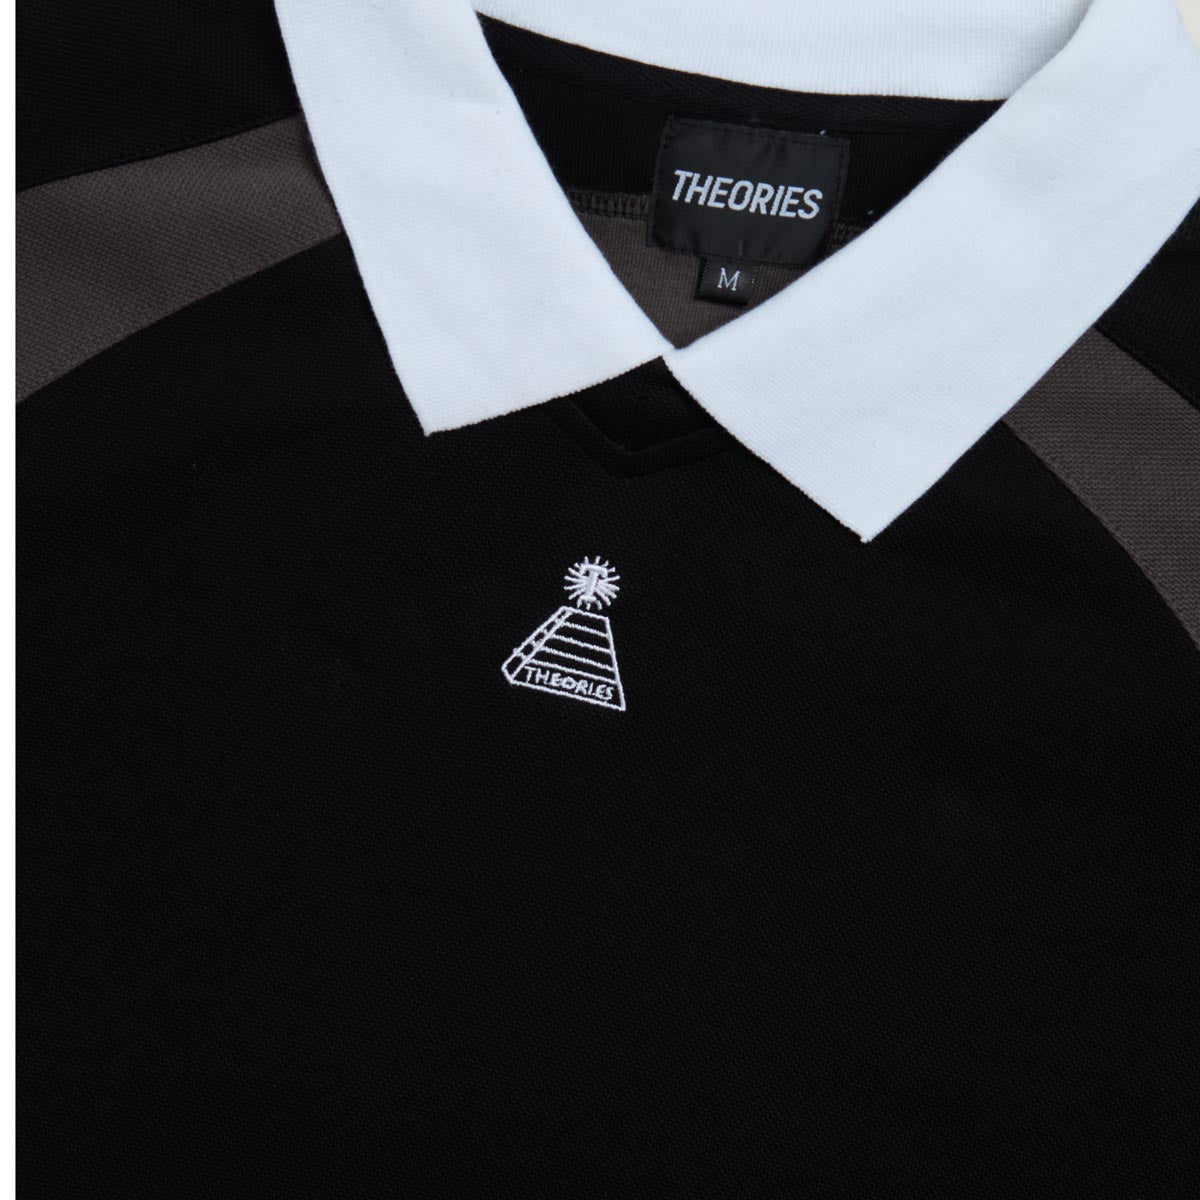 Theories Midfield Pique Polo Shirt - Black/Grey image 3